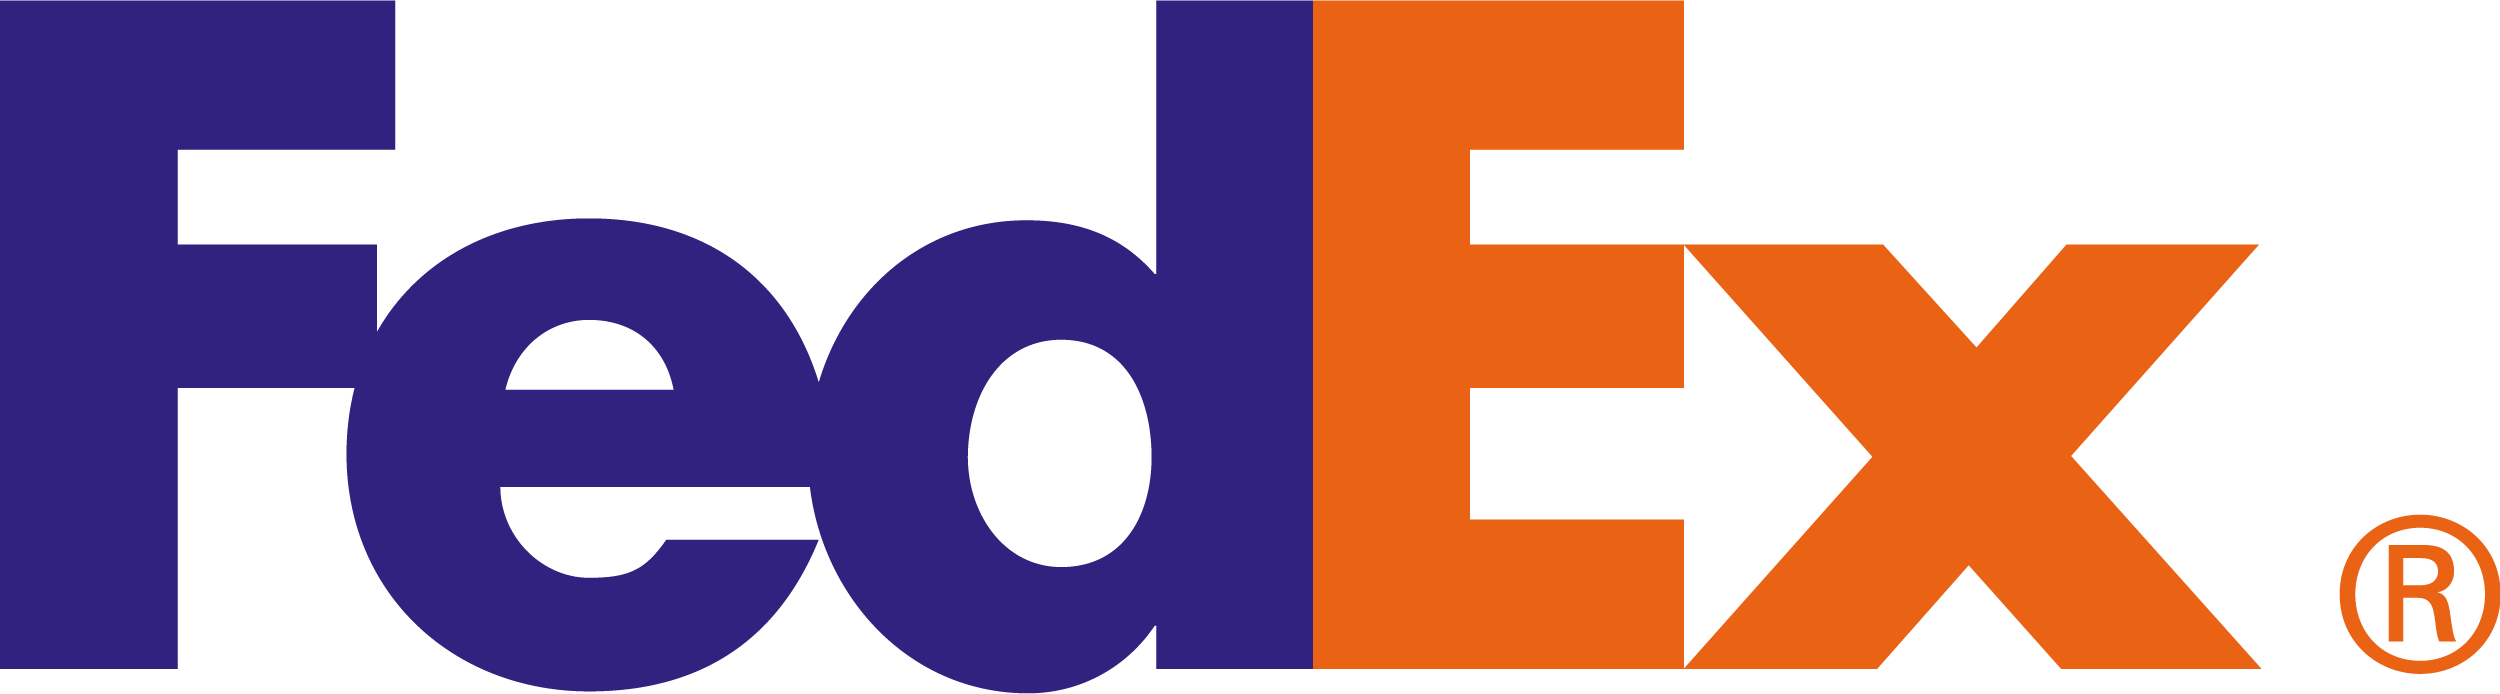 Fedex Logo PNG title=